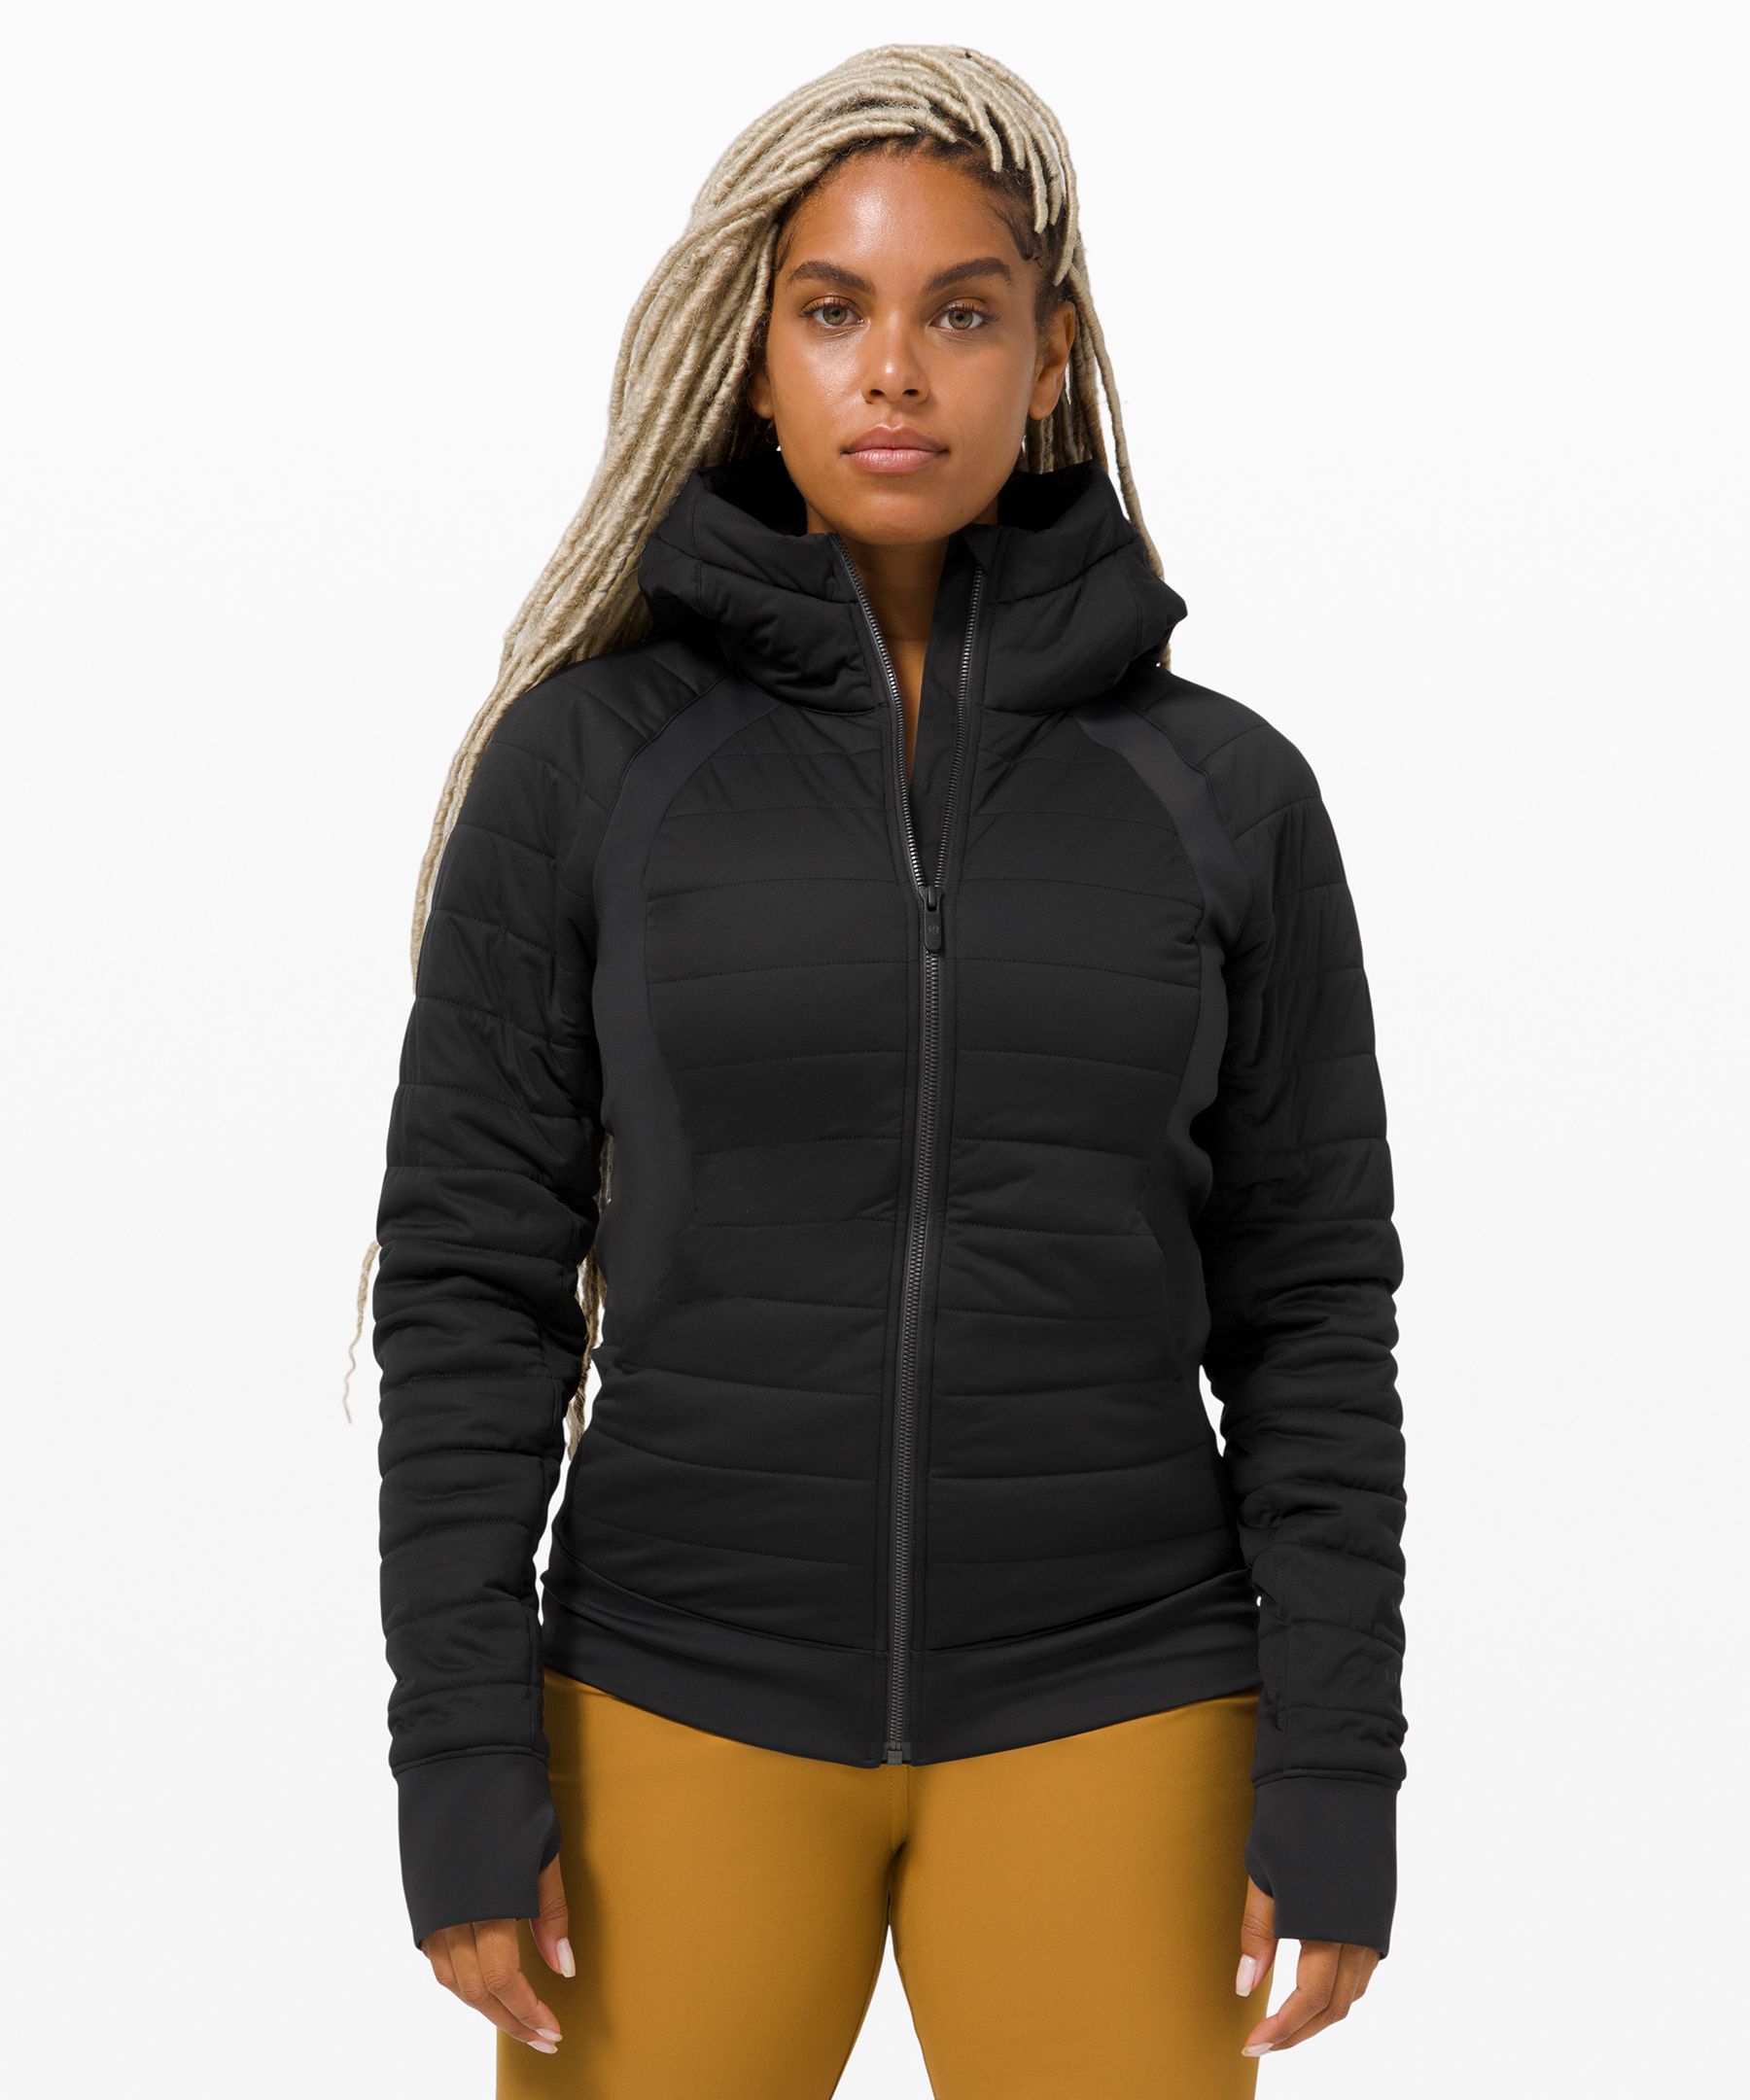 lululemon gray zip up jacket